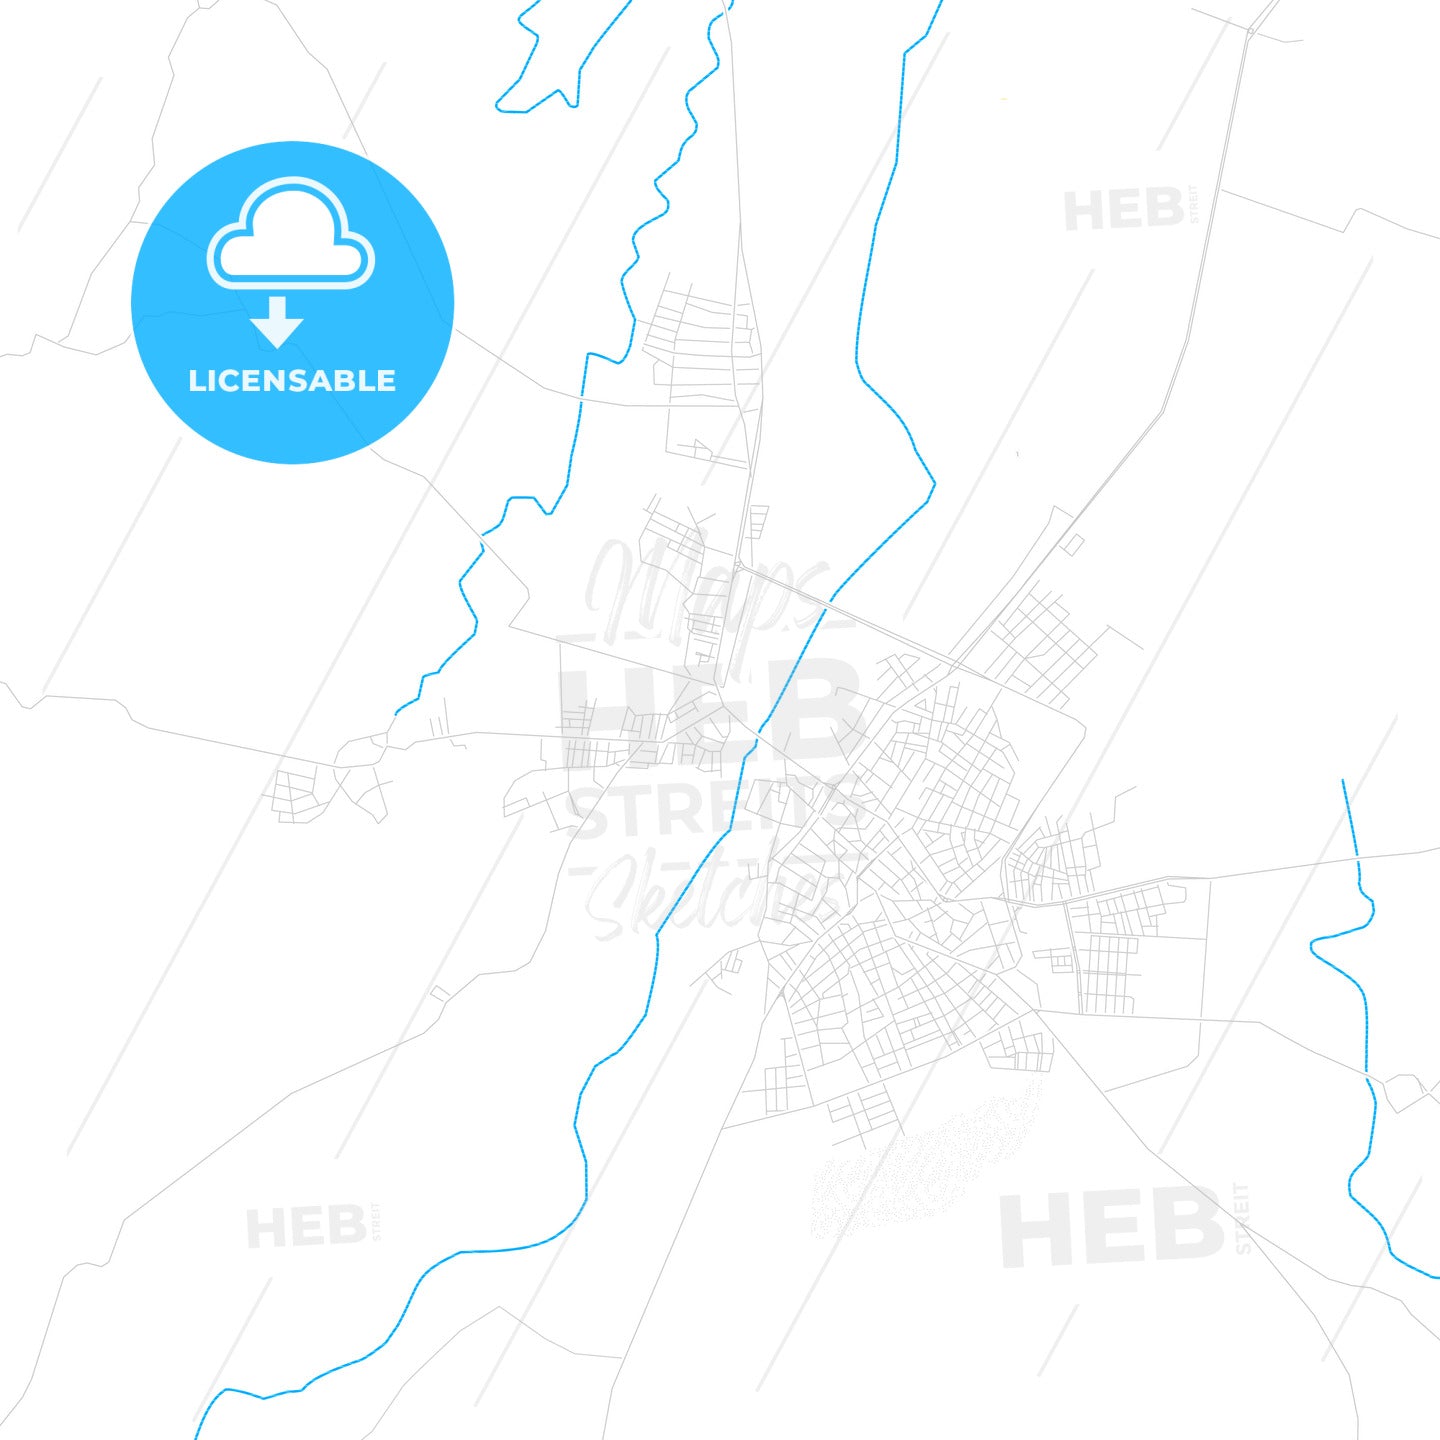 Gönen, Turkey PDF vector map with water in focus